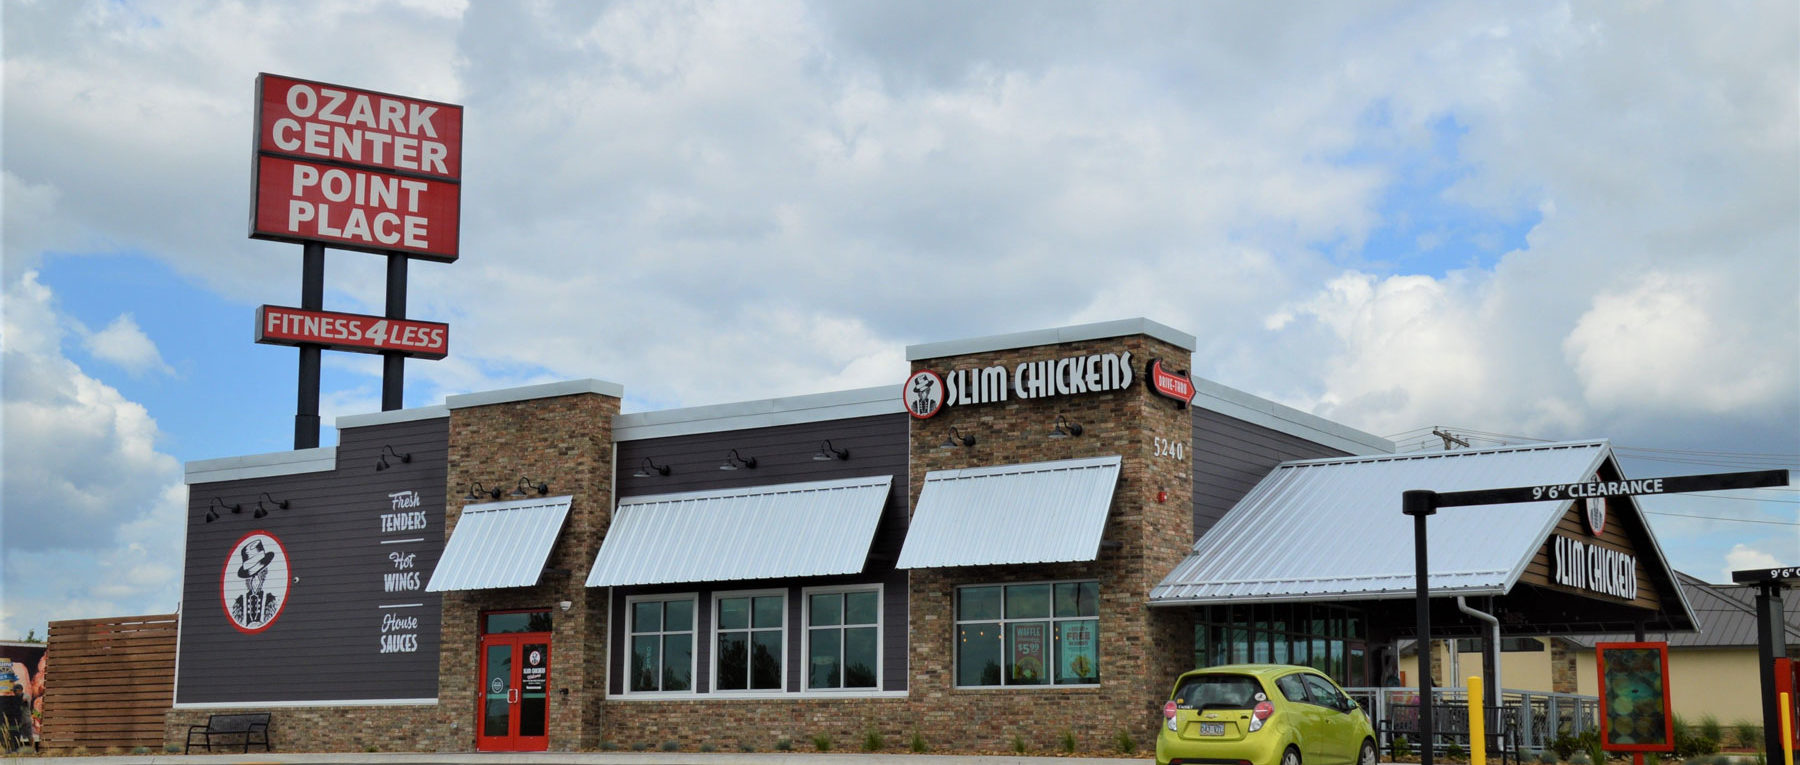 slim chickens building